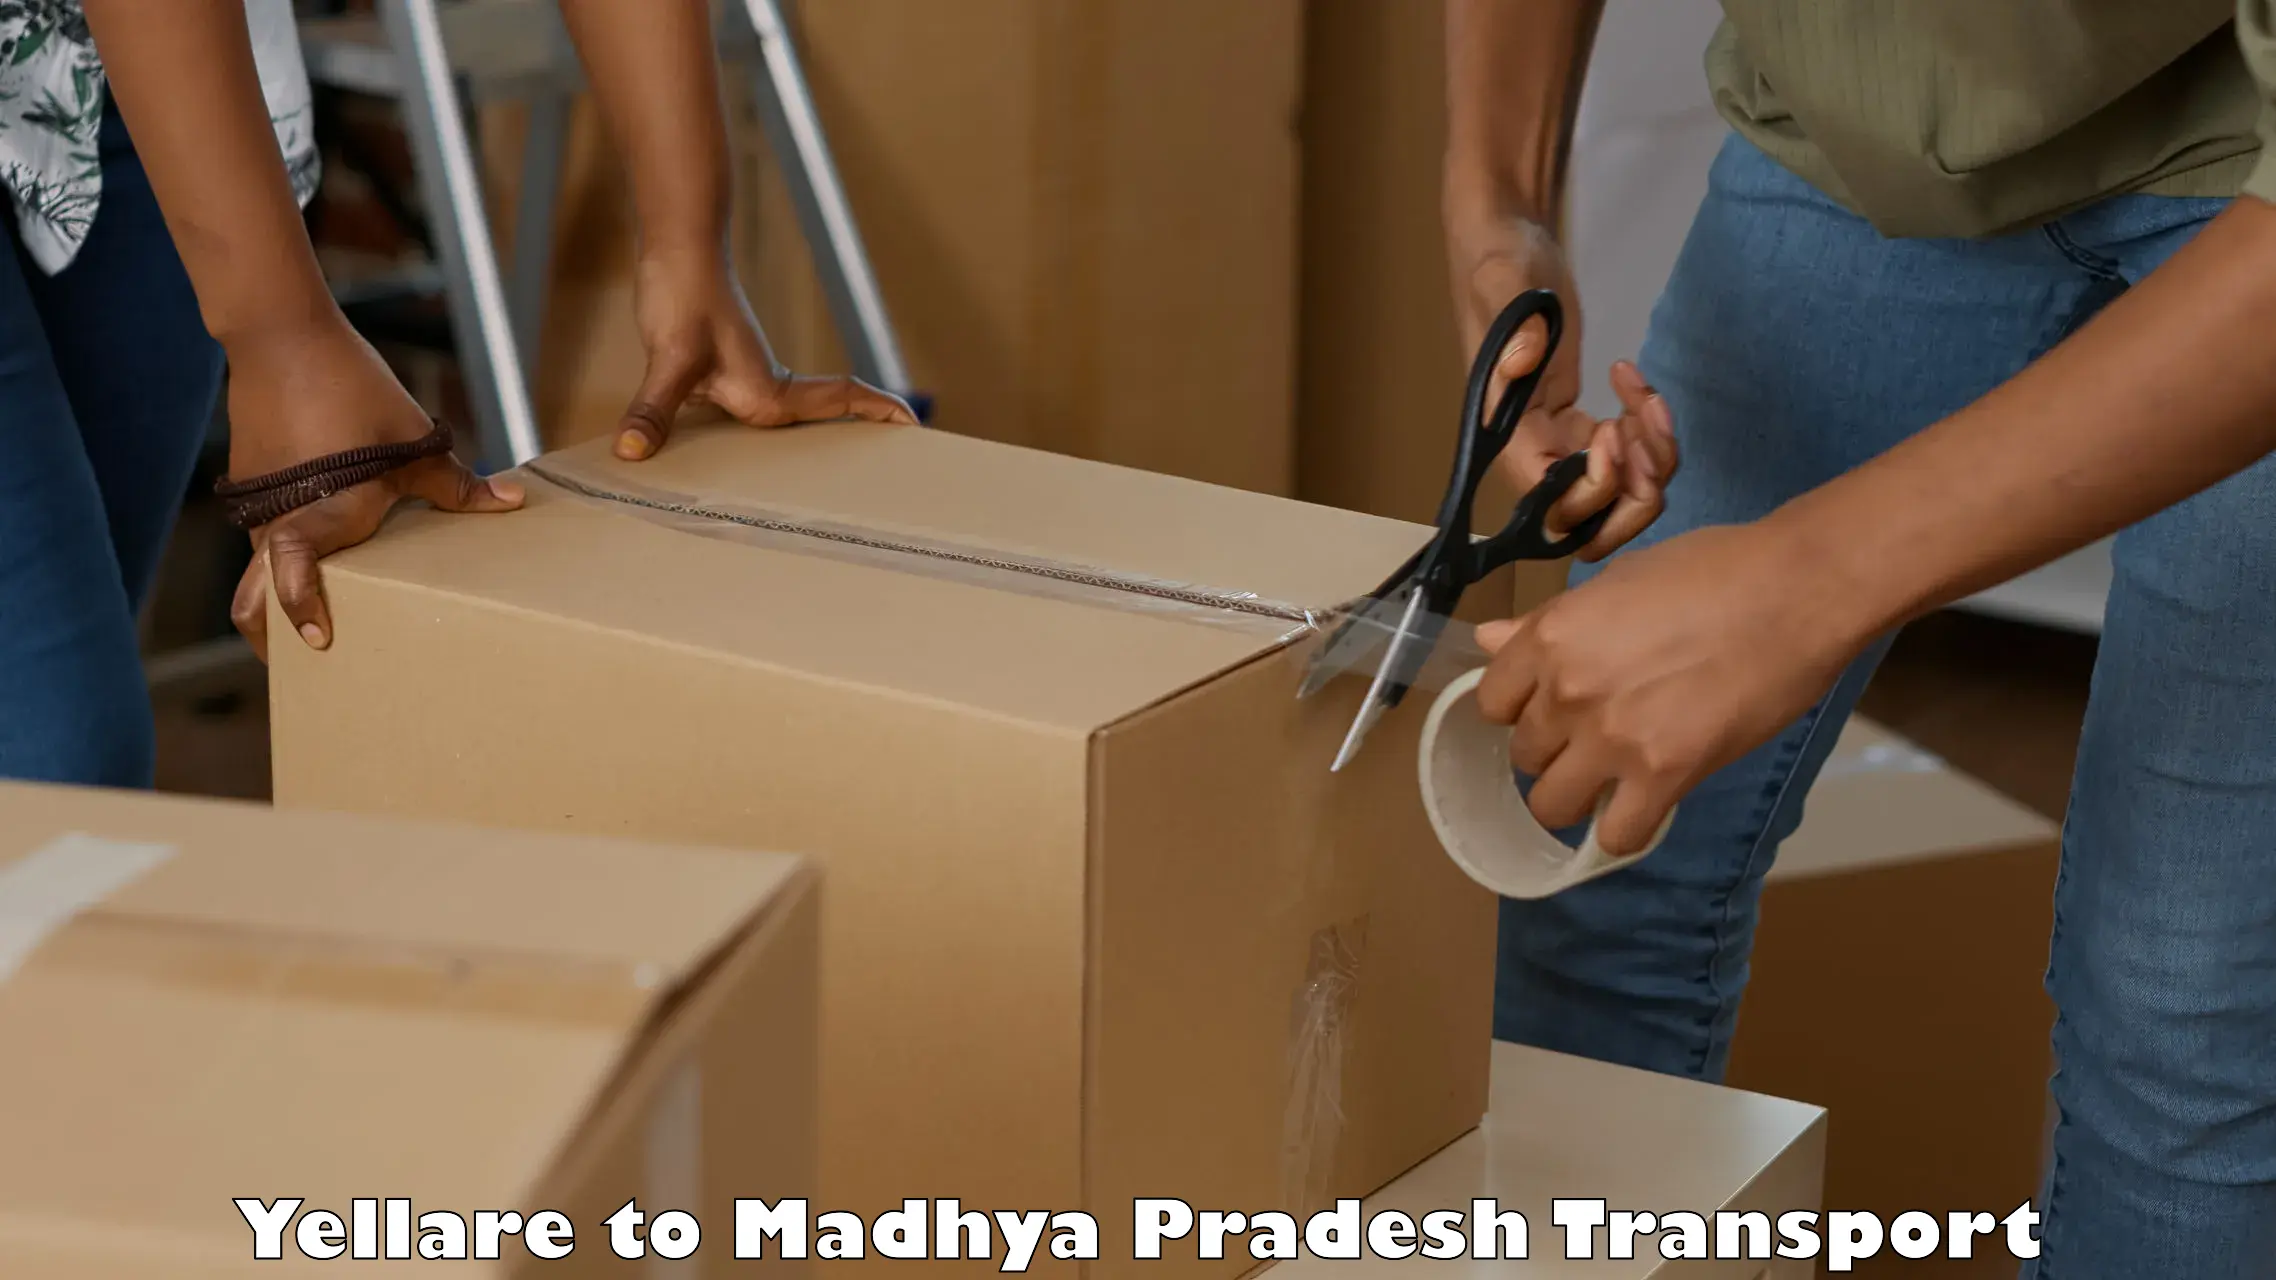 Best transport services in India Yellare to Madhya Pradesh